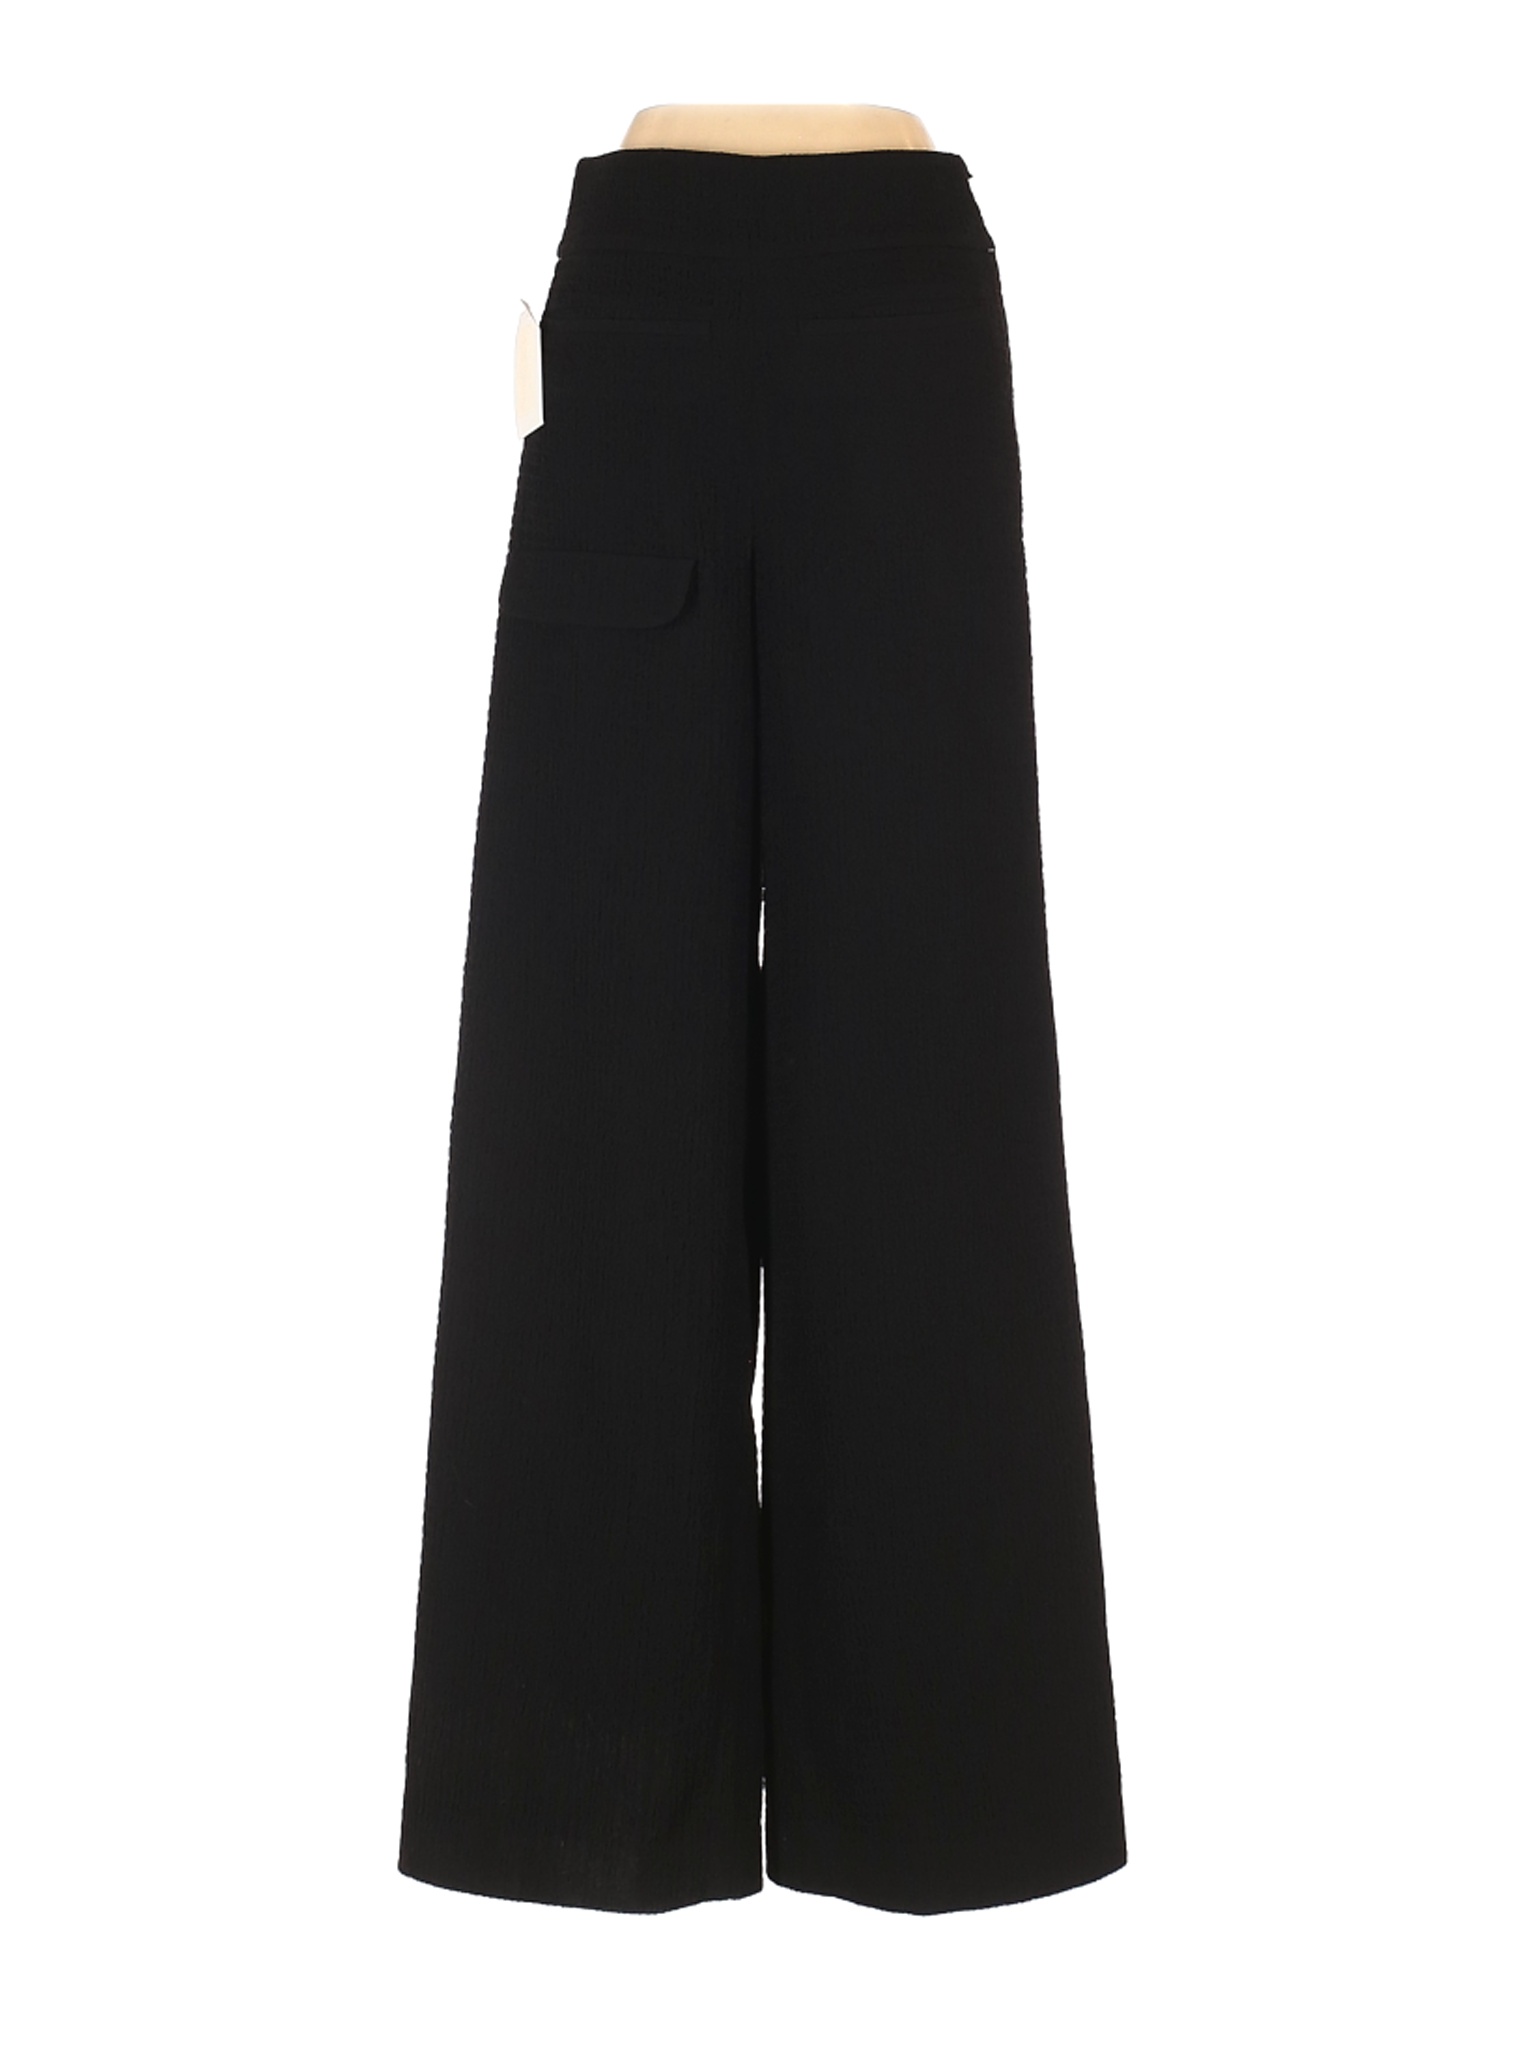 NWT Rejina Pyo Women Black Dress Pants 6 | eBay